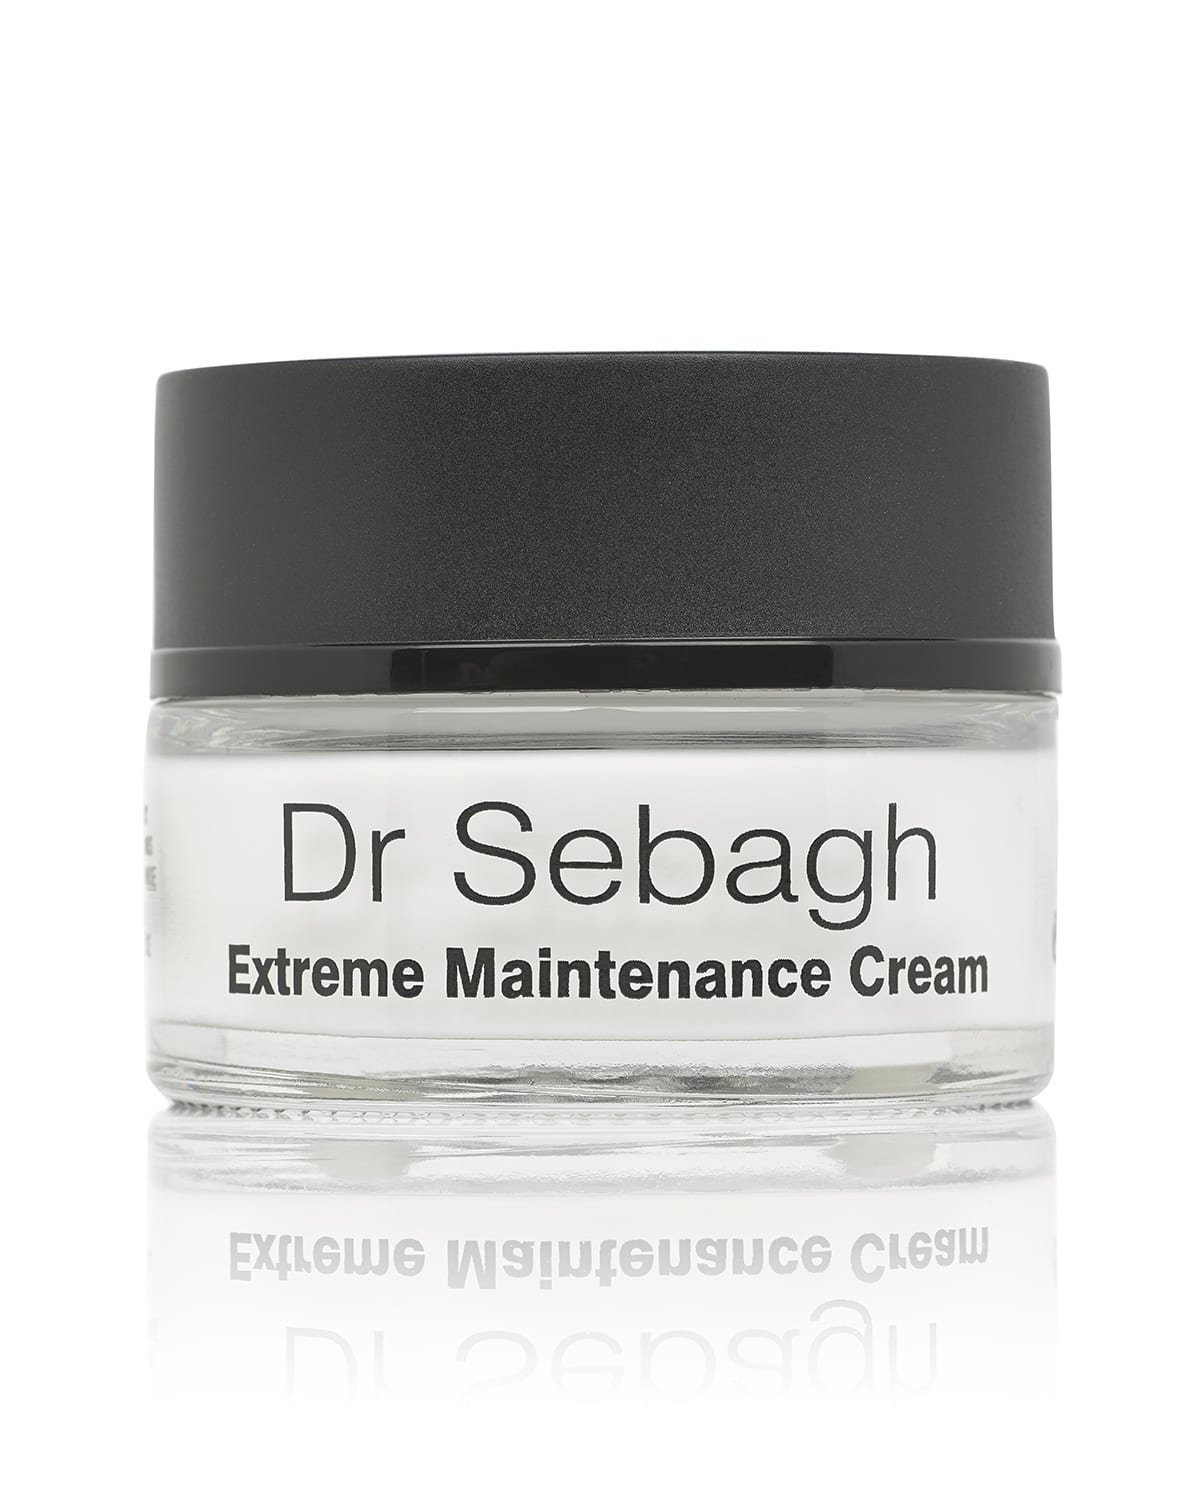 Dr Sebagh 1.7 oz. Extreme Maintenance Cream